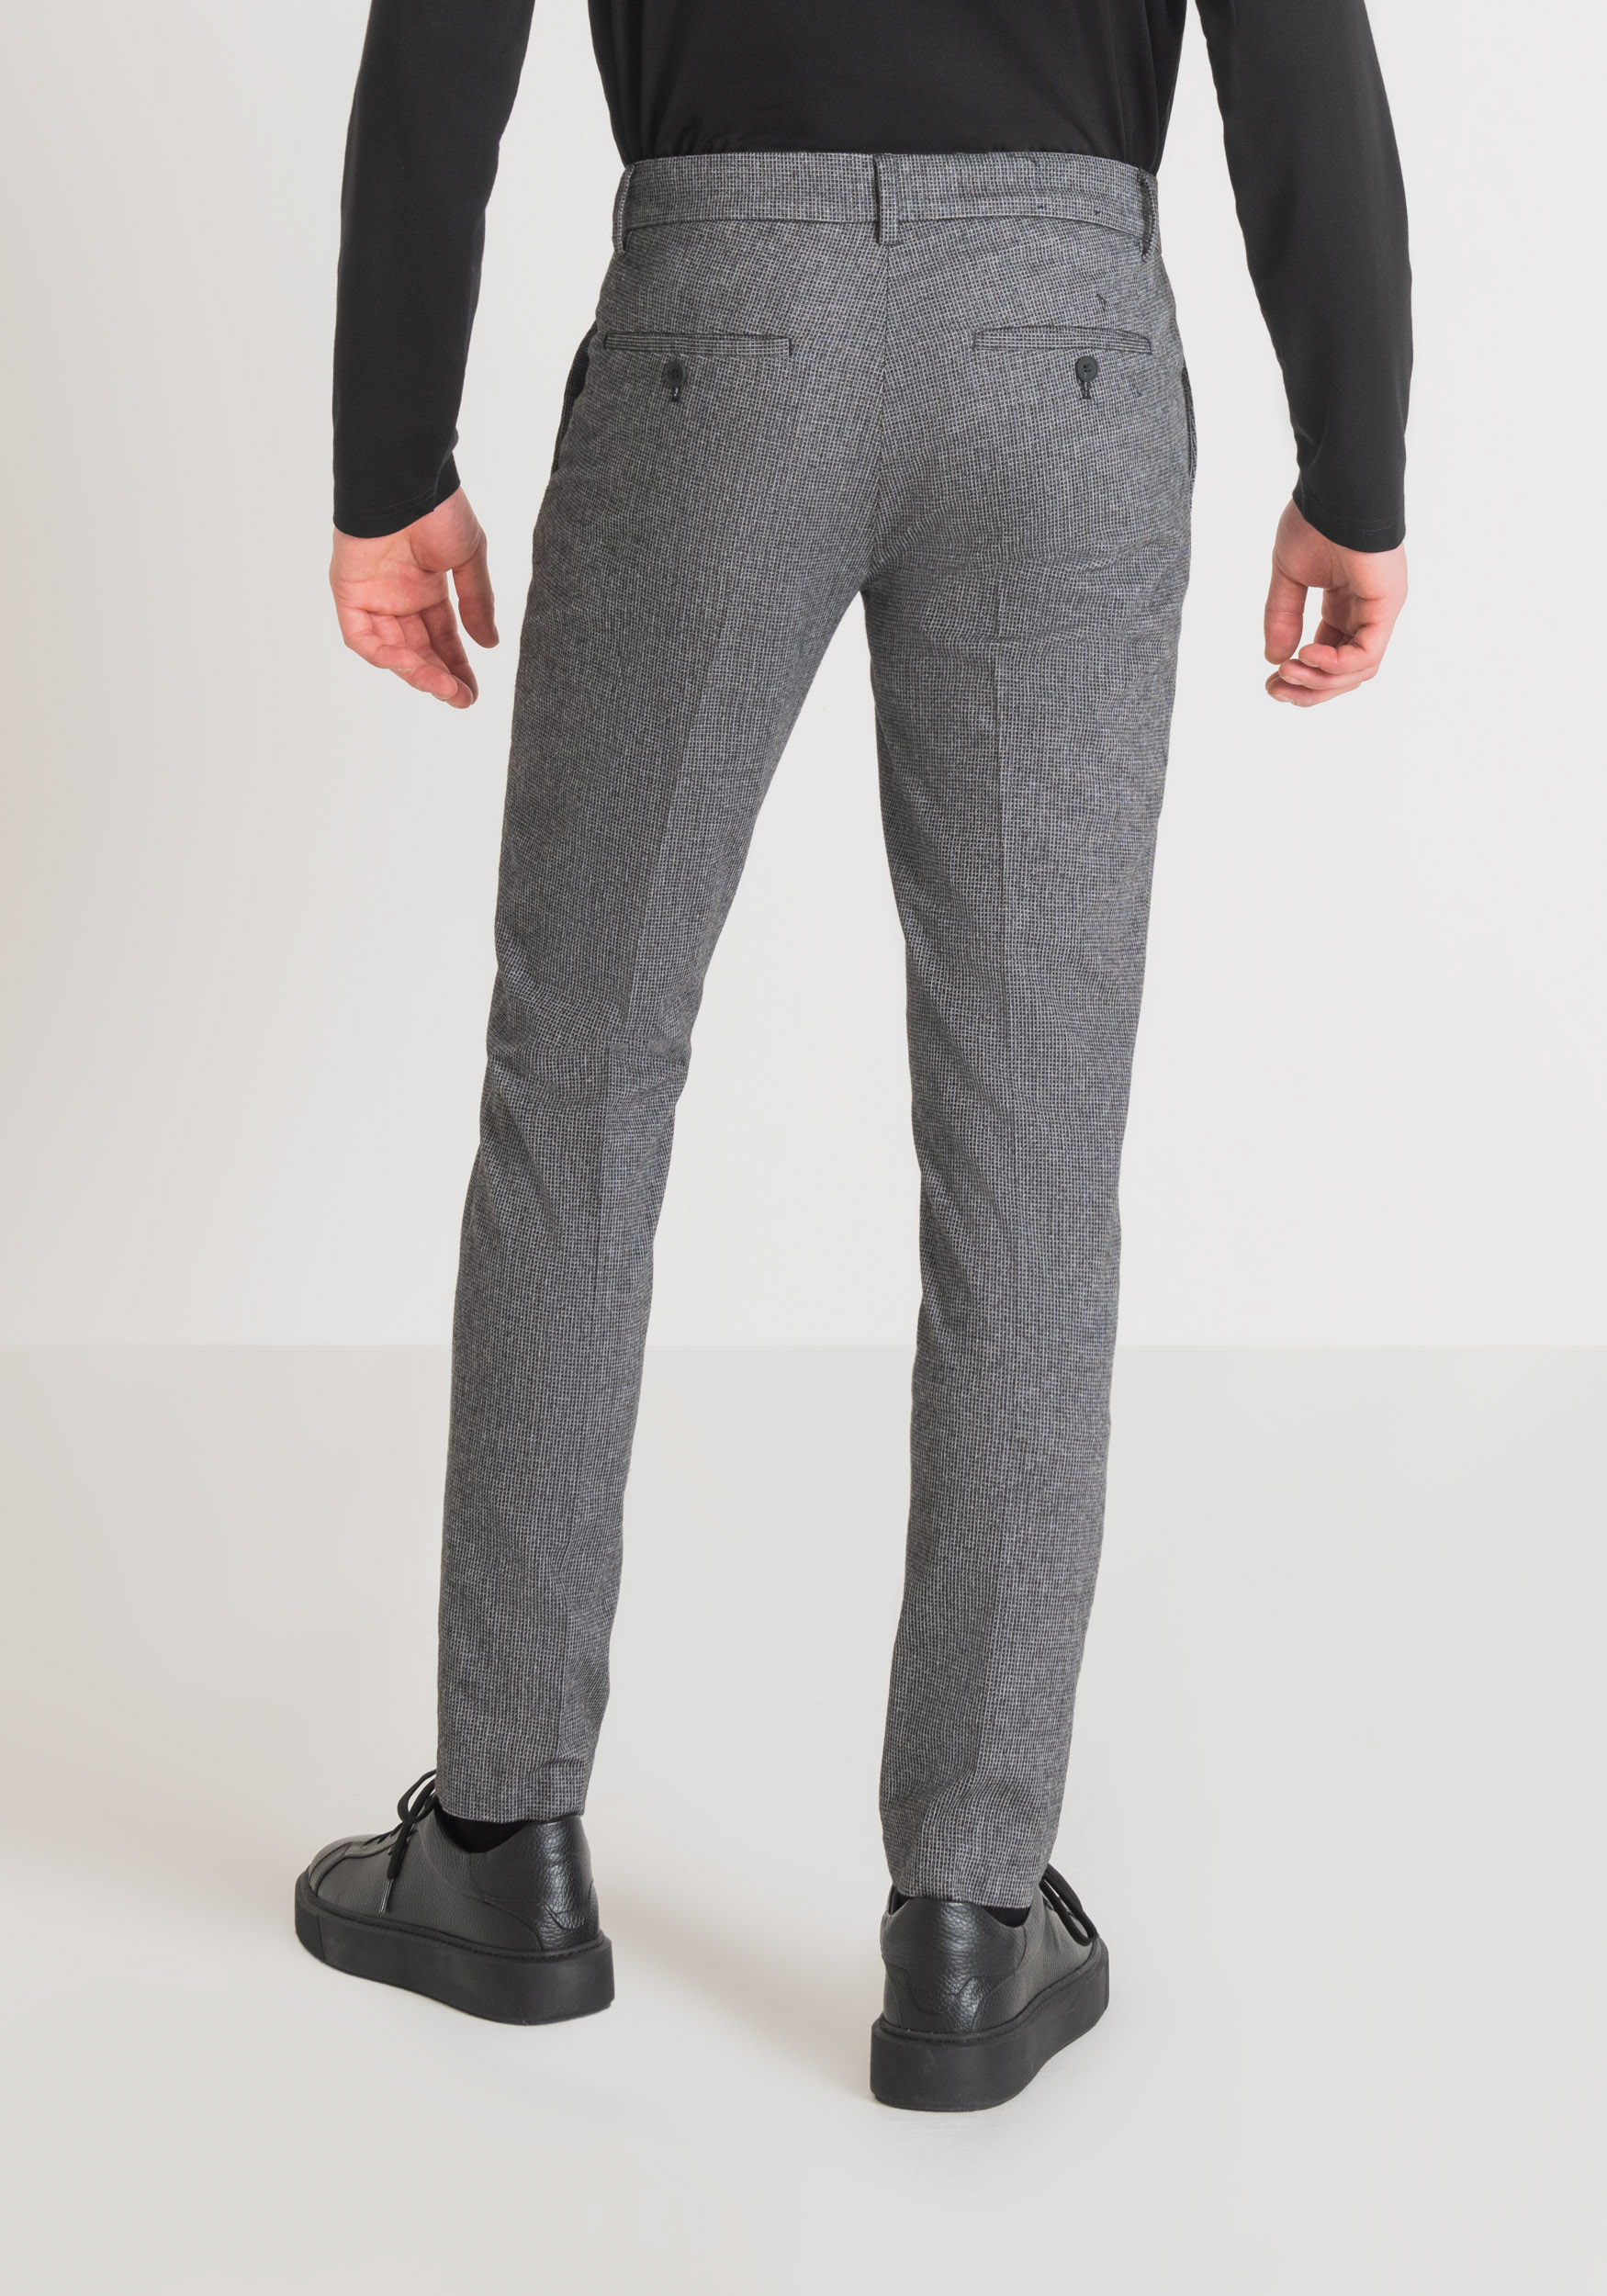 Antony Morato Pantalon Skinny Fit Bryan En Coton Melange Armure Elastique Noir | Homme Pantalons